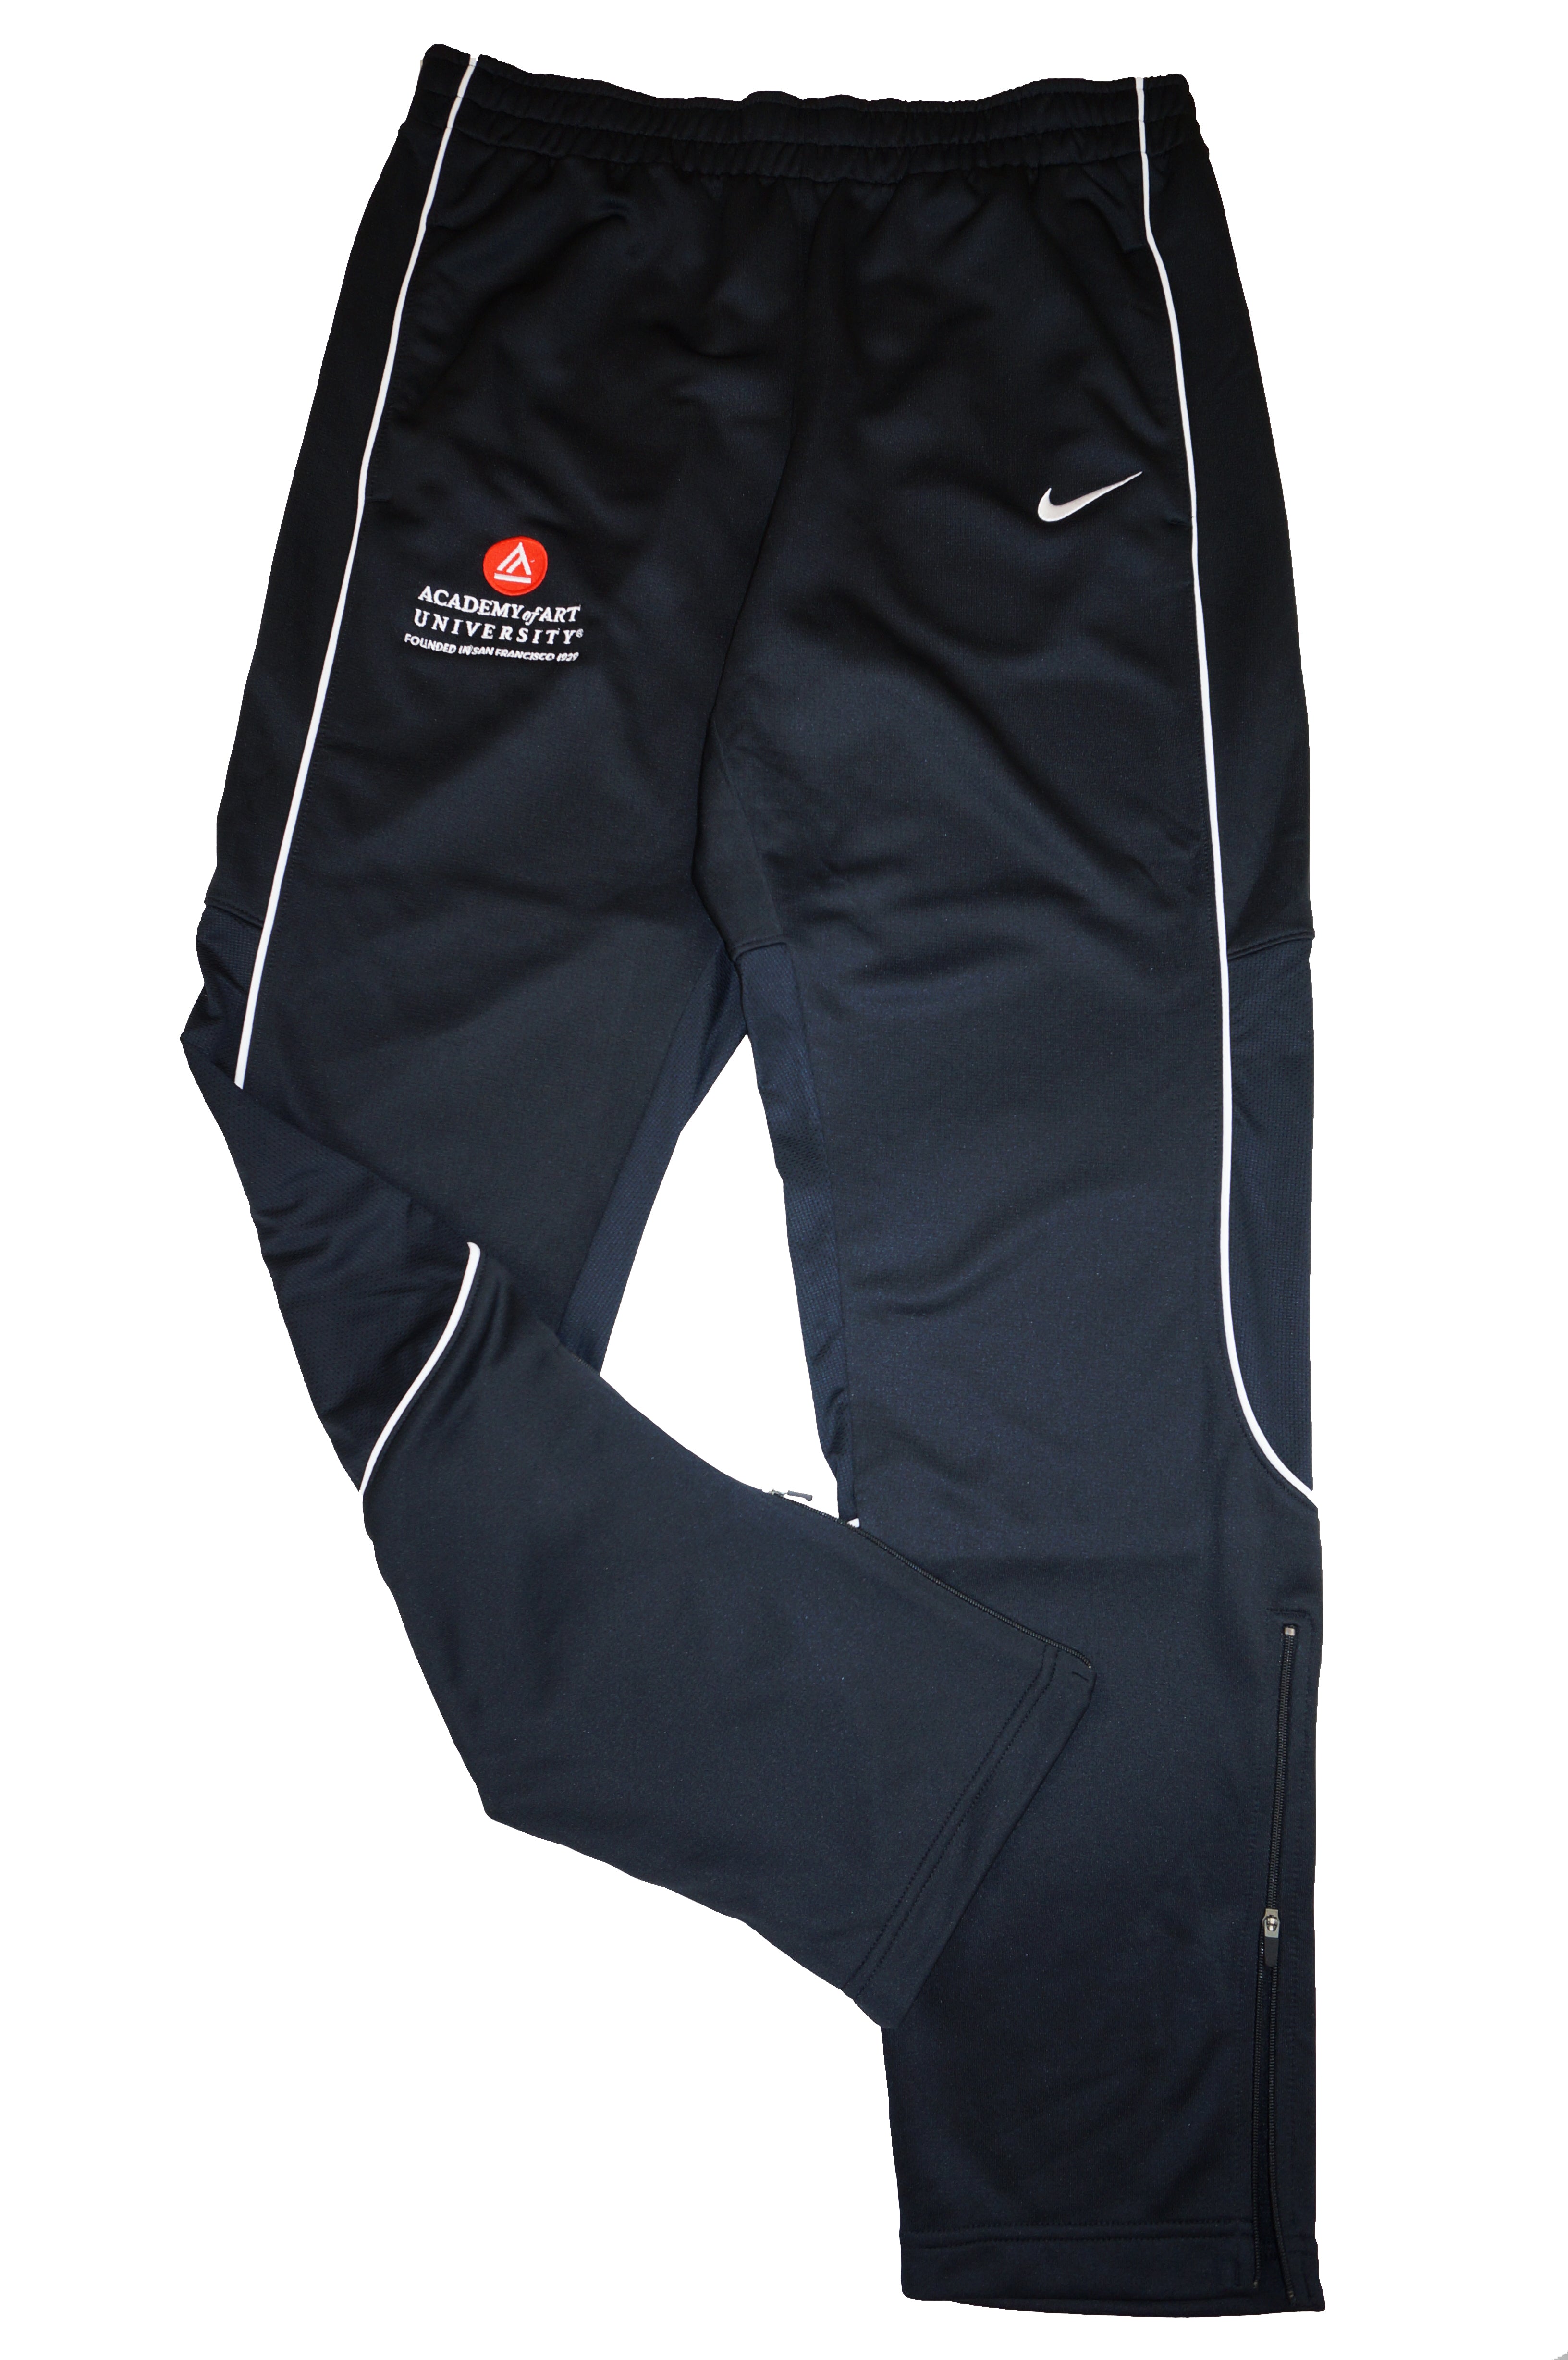 Mesh Nike Sweatpants - Shop657